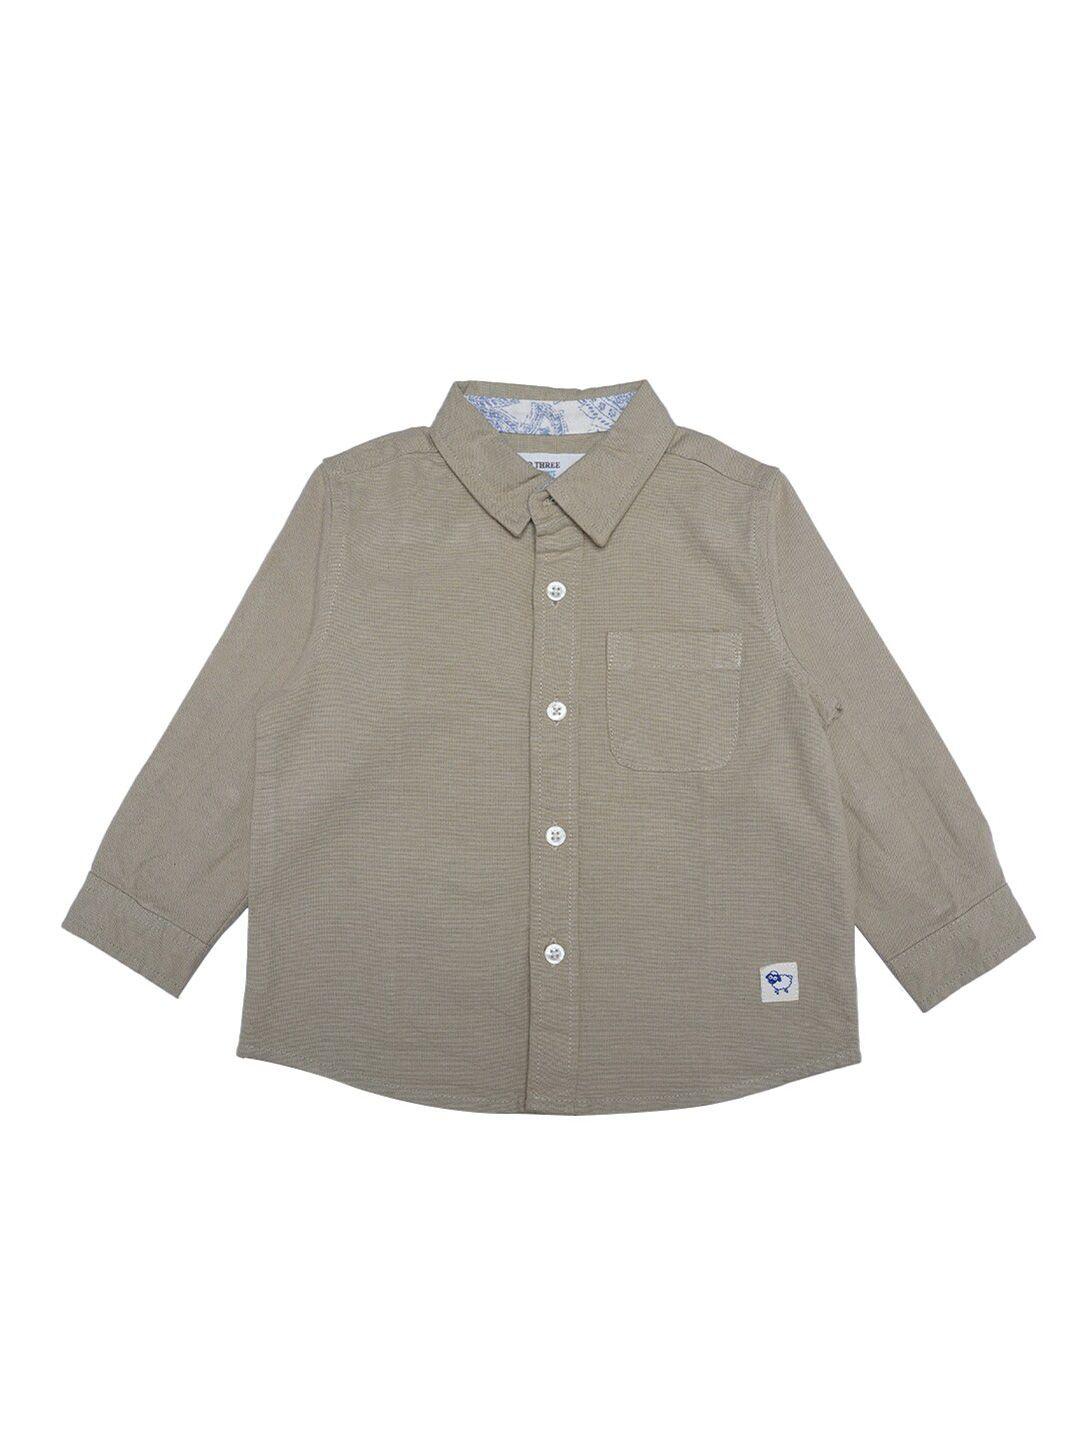 zero three boys light brown solid custom fit cotton casual shirt